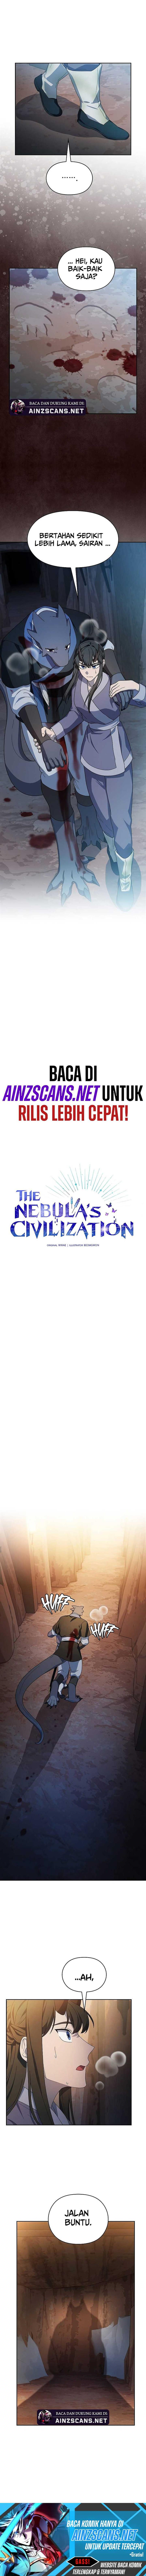 The Nebula’s Civilization Chapter 36